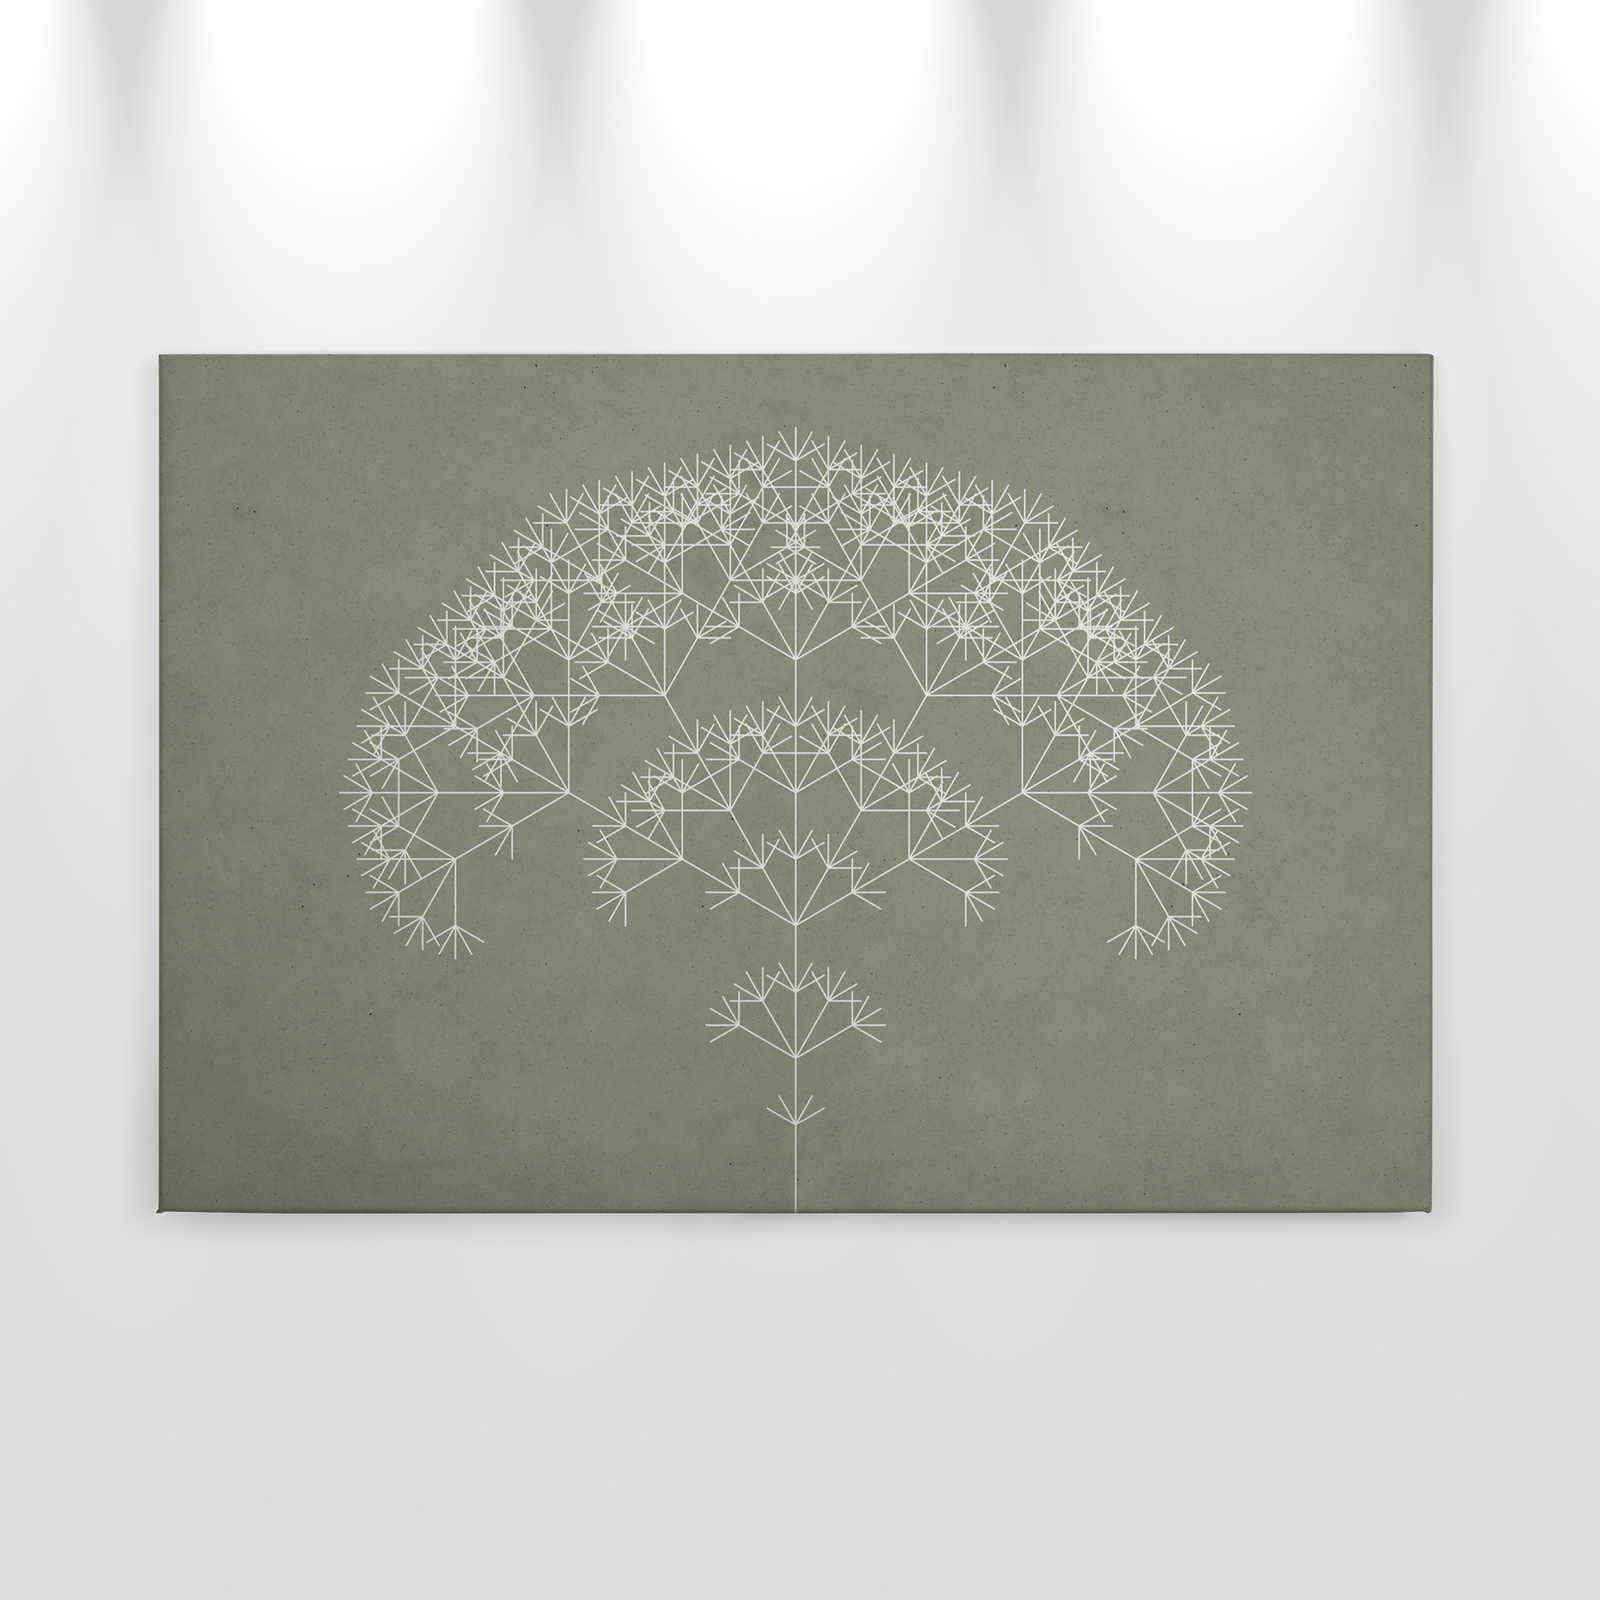             Canvas painting Dandelions Tree | green, white - 0,90 m x 0,60 m
        